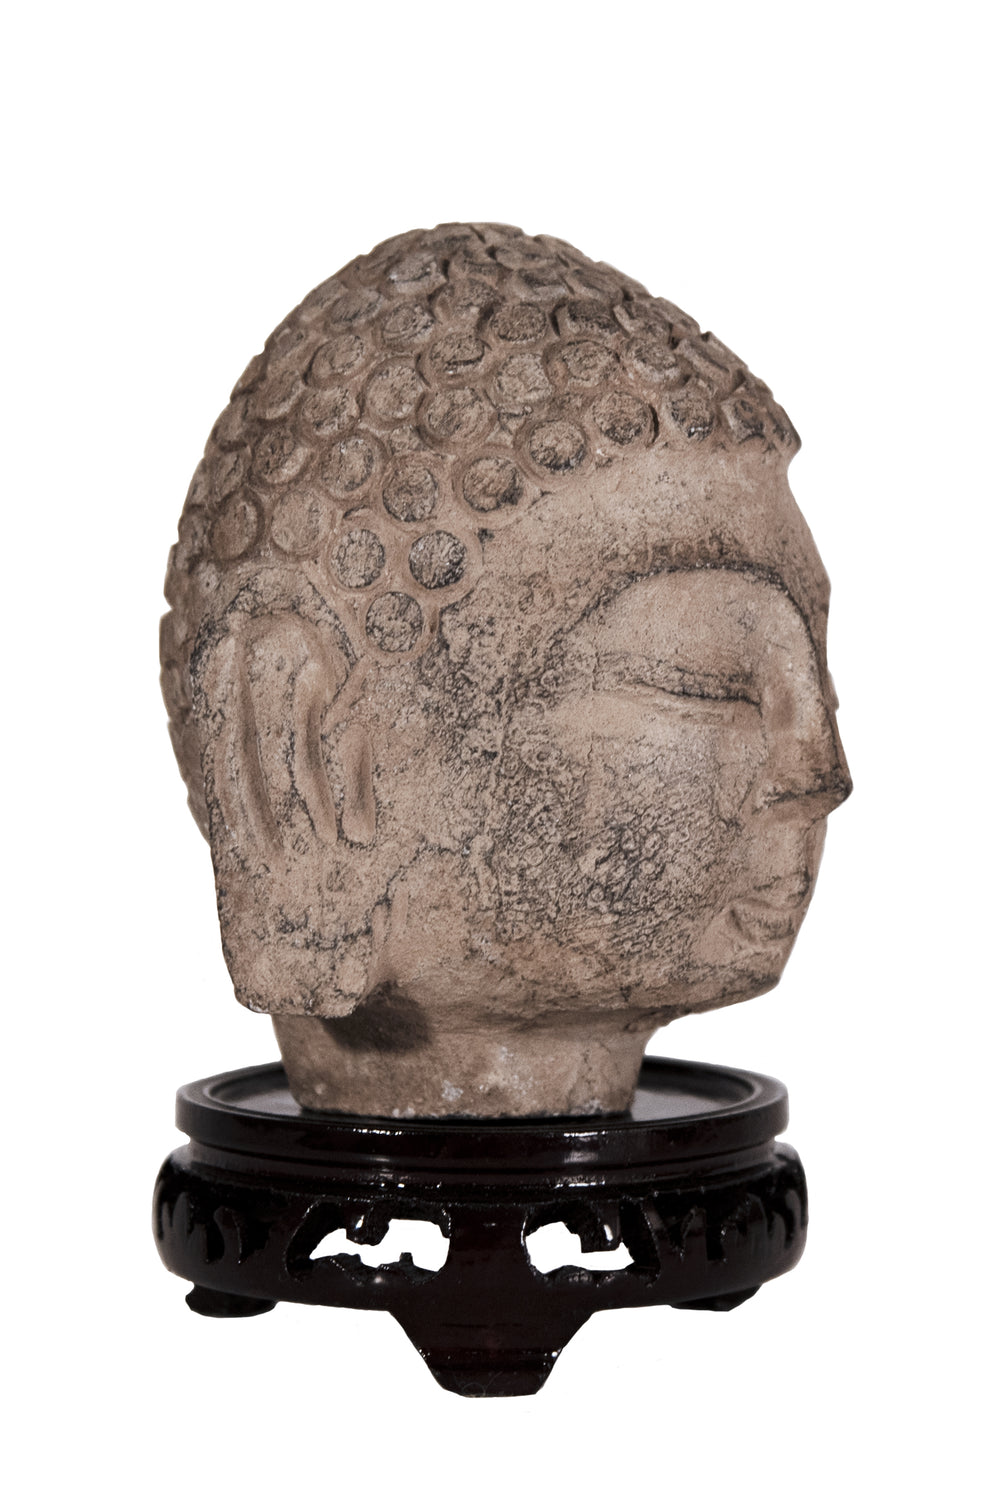 A Small South East Asian Bodhisattva Sculpture